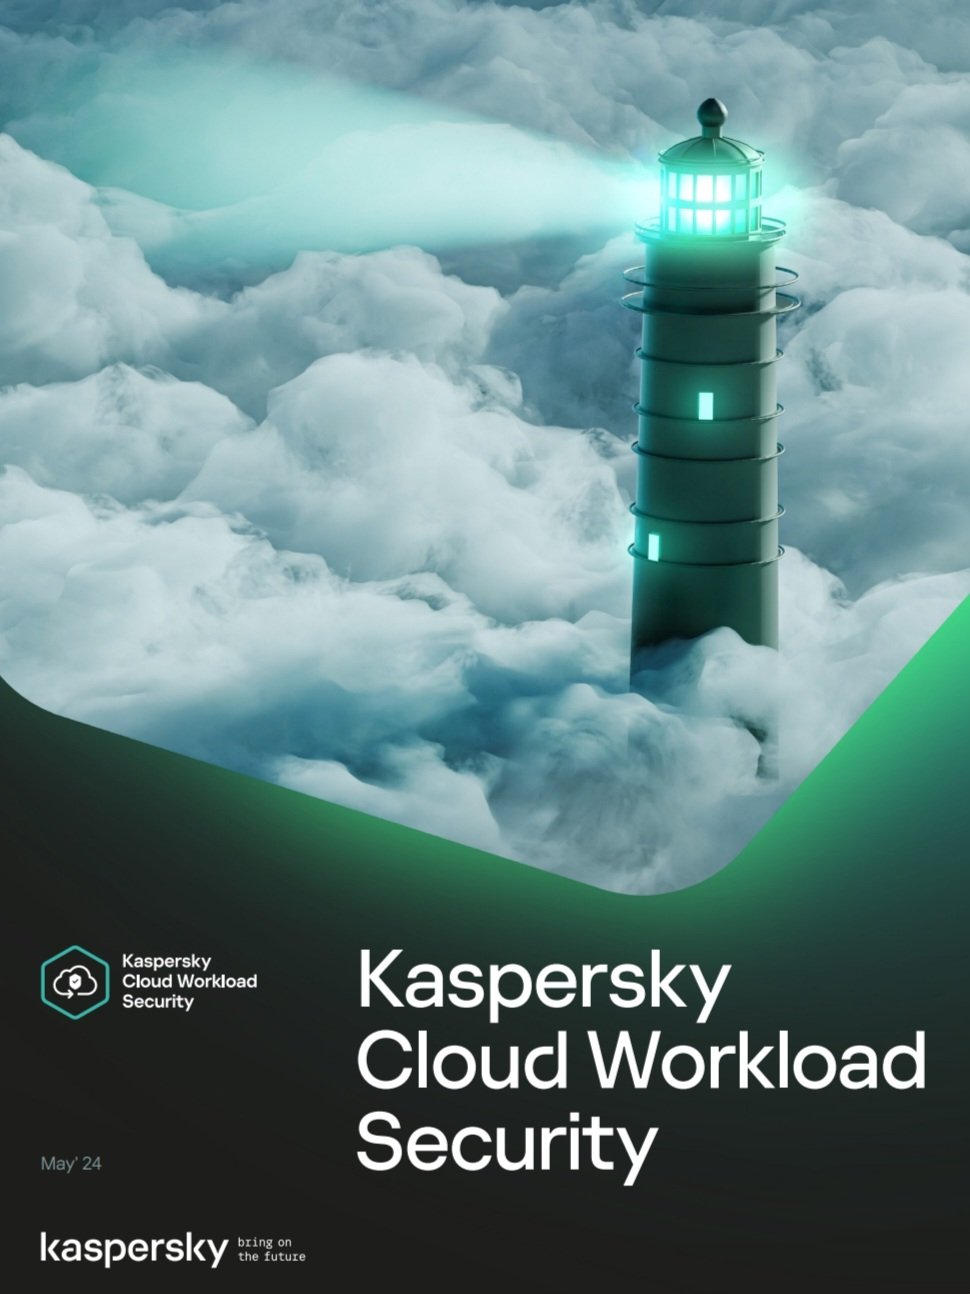 Safeguard your cloud environment: introducing Kaspersky Cloud Workload Security ecosystem